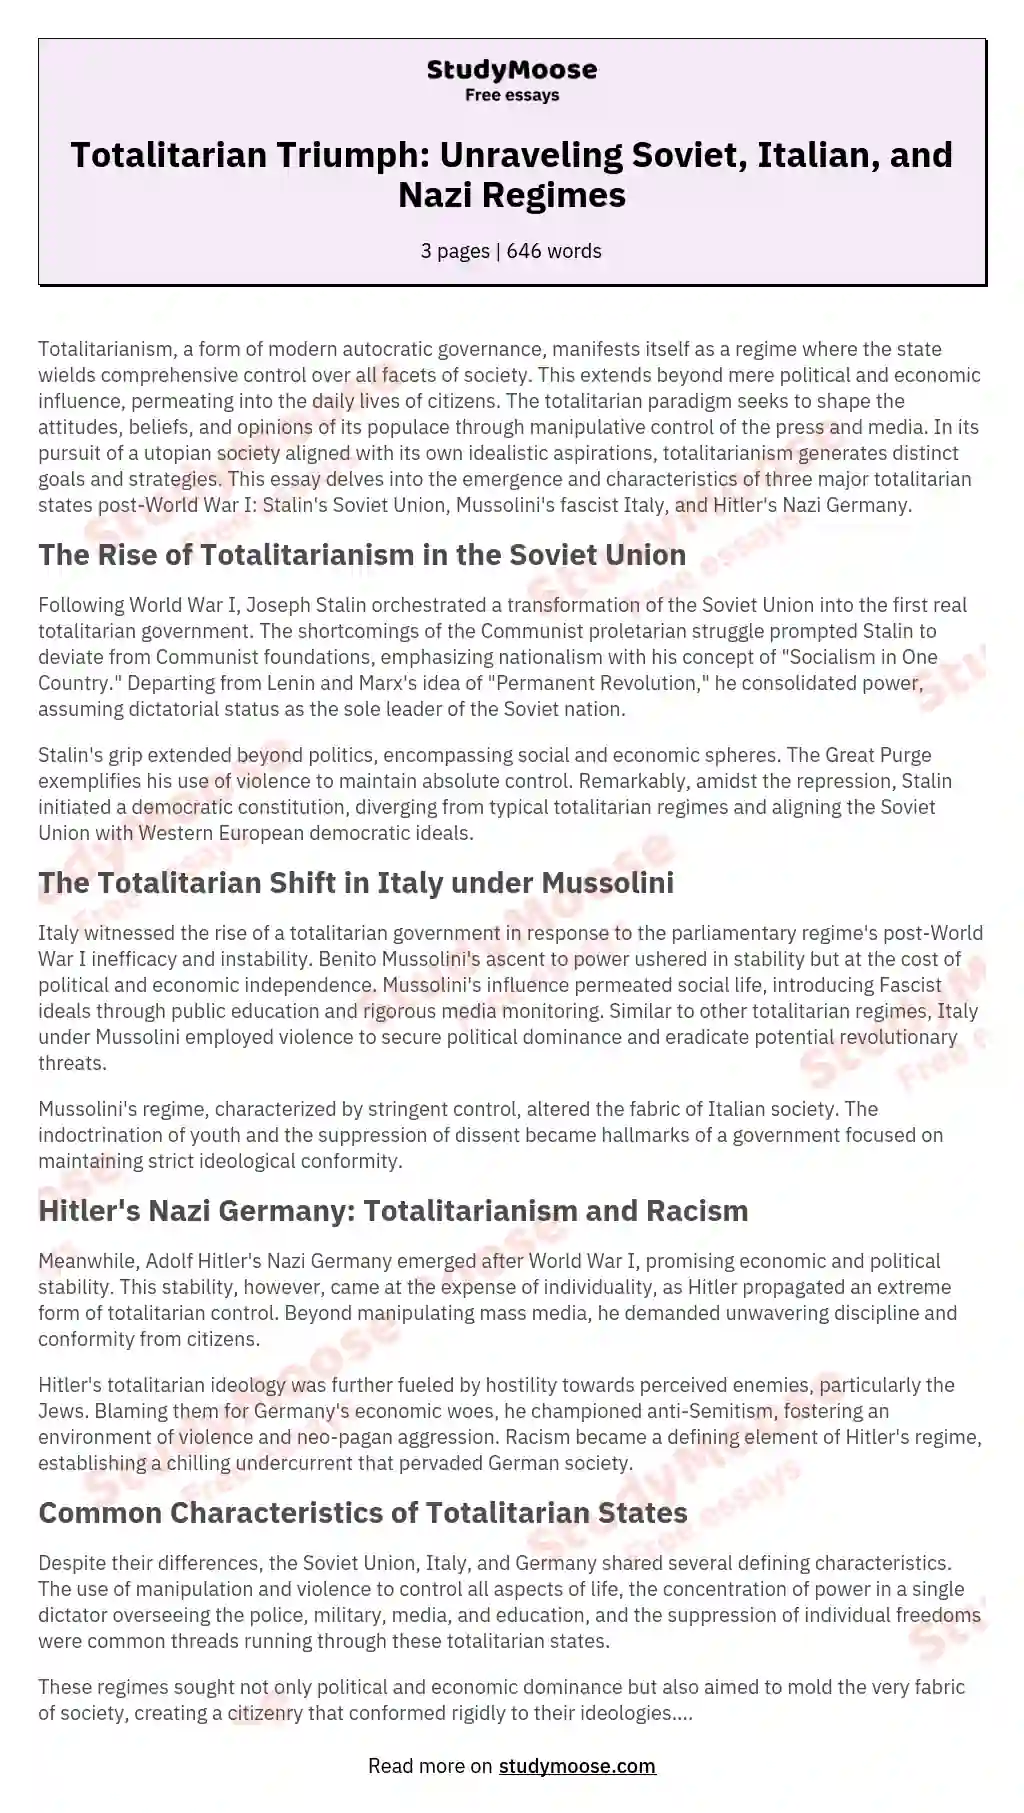 Totalitarian Triumph: Unraveling Soviet, Italian, and Nazi Regimes essay